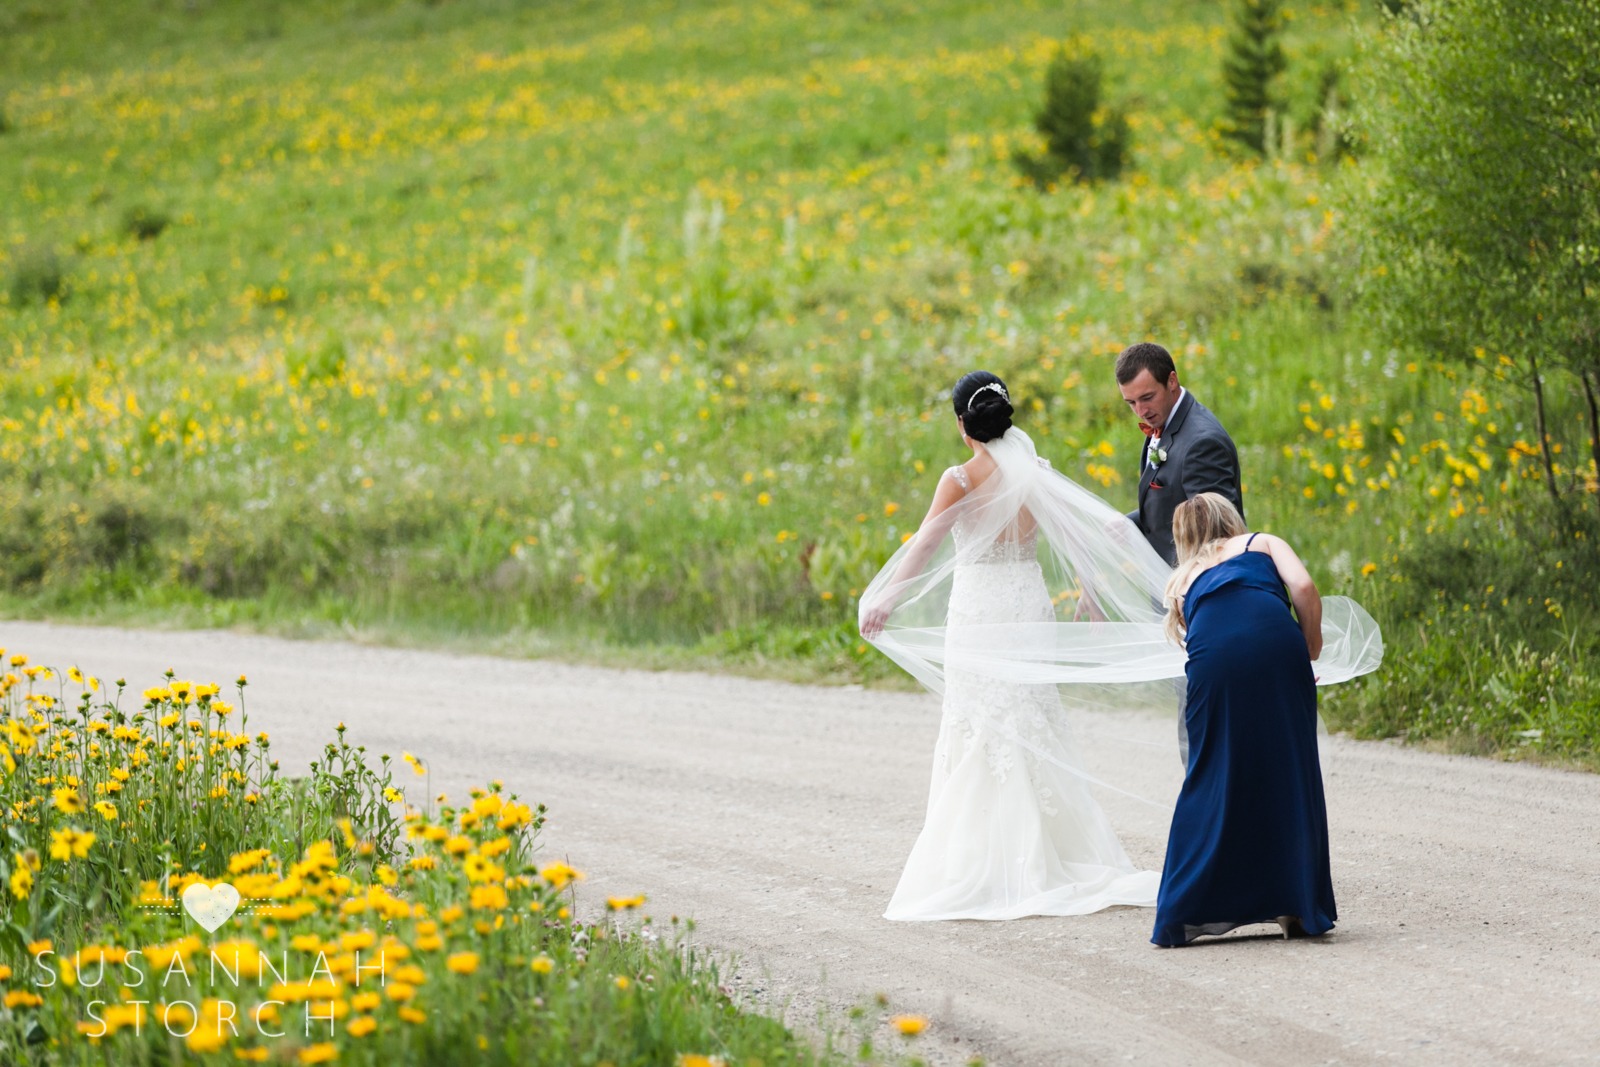 a bridemaid helps fix a bride's veil and dress